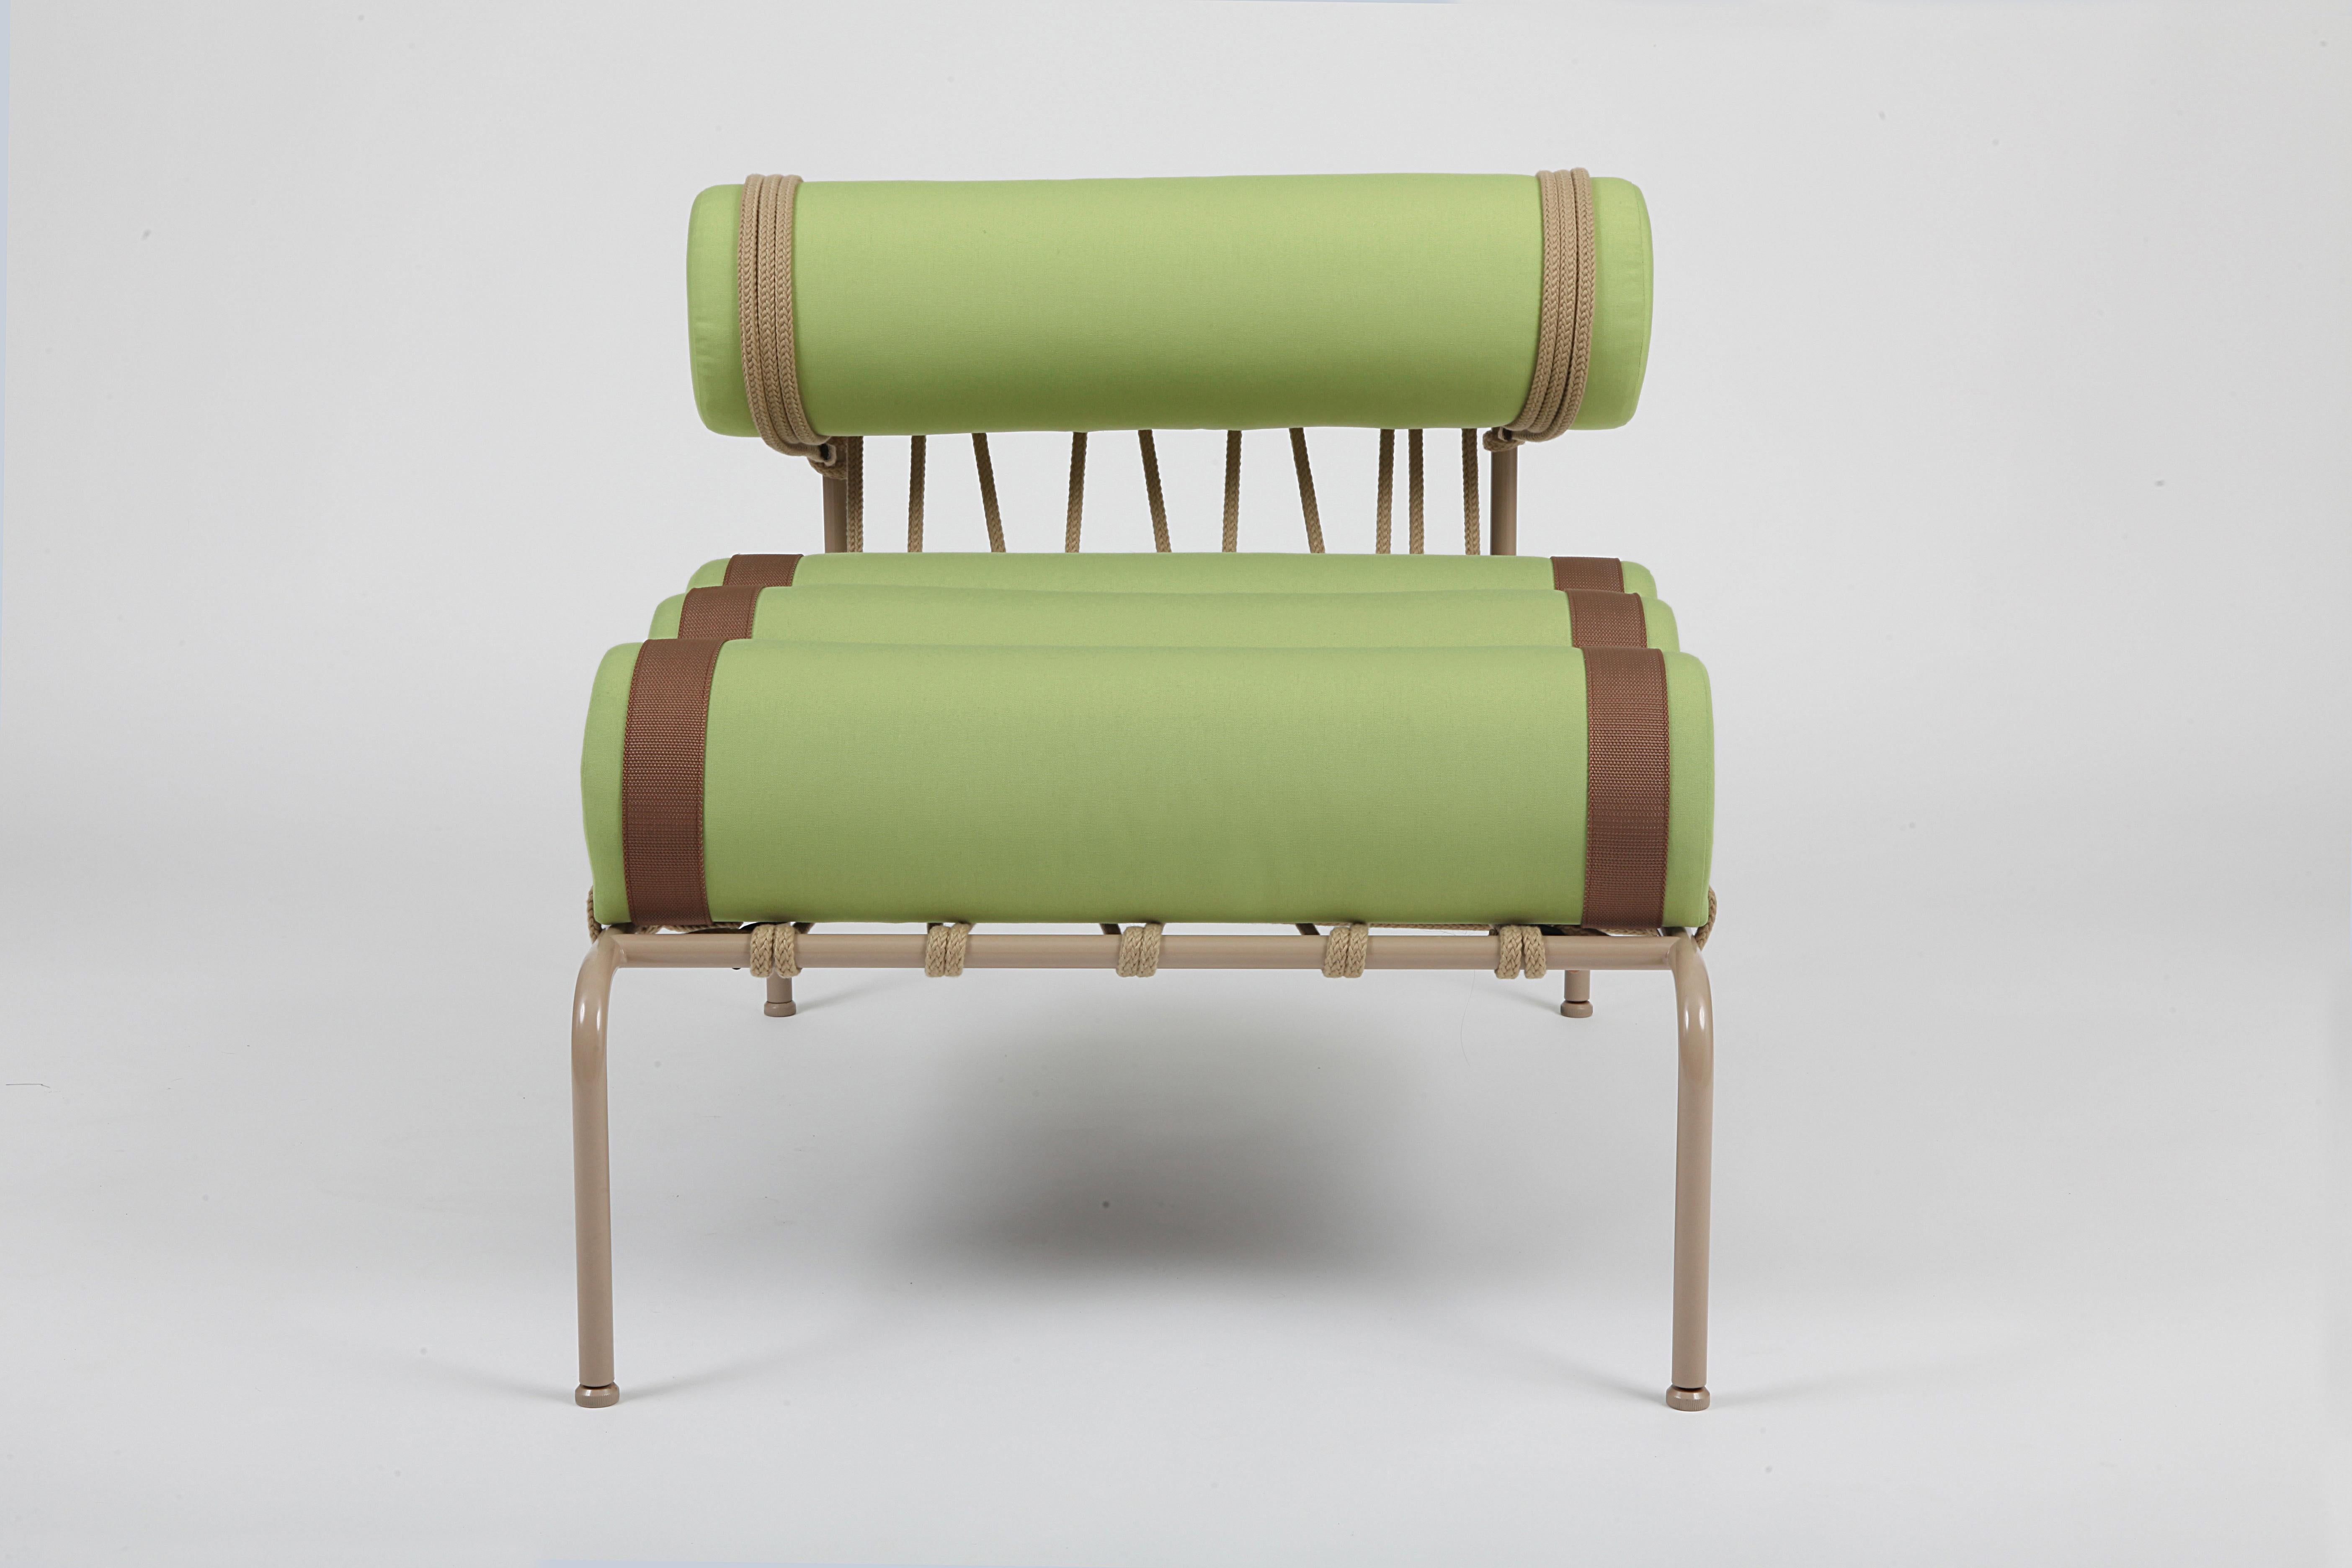 Post-Modern Verde Oasi Plain Kylíndo Outdoor Armchair by Dalmoto For Sale